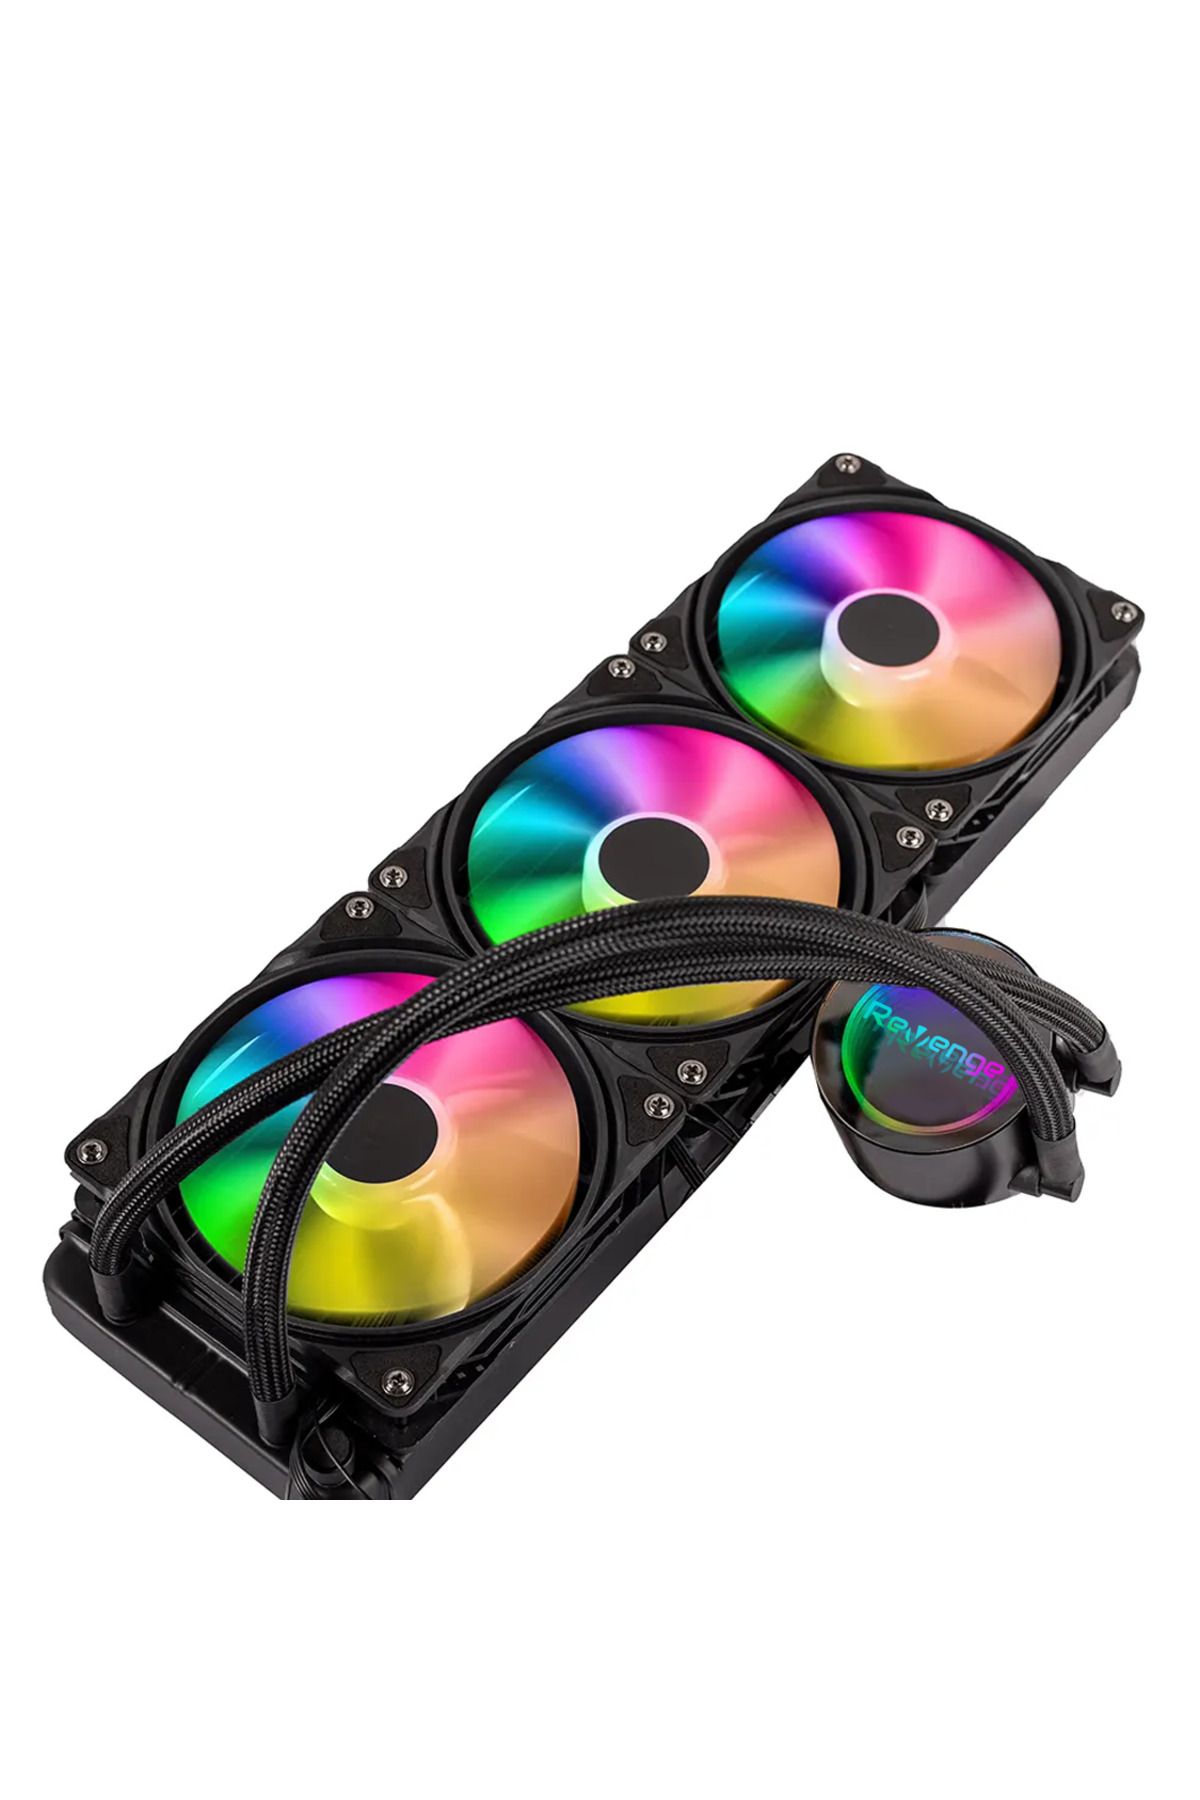 Revenge Nitro Cold 300 Intel ve AMD Destekli RGB Fanlı Infinite Panel CPU İşlemci 360mm Sıvı Soğutma Sistemi